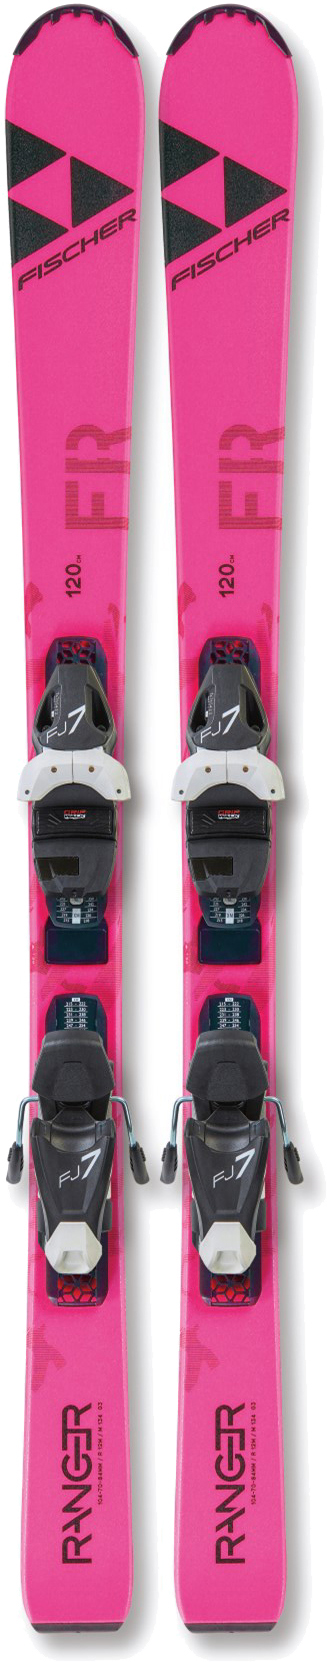 Лыжи твин-тип Fischer Ranger Fr Jr Slr Pro 110 см